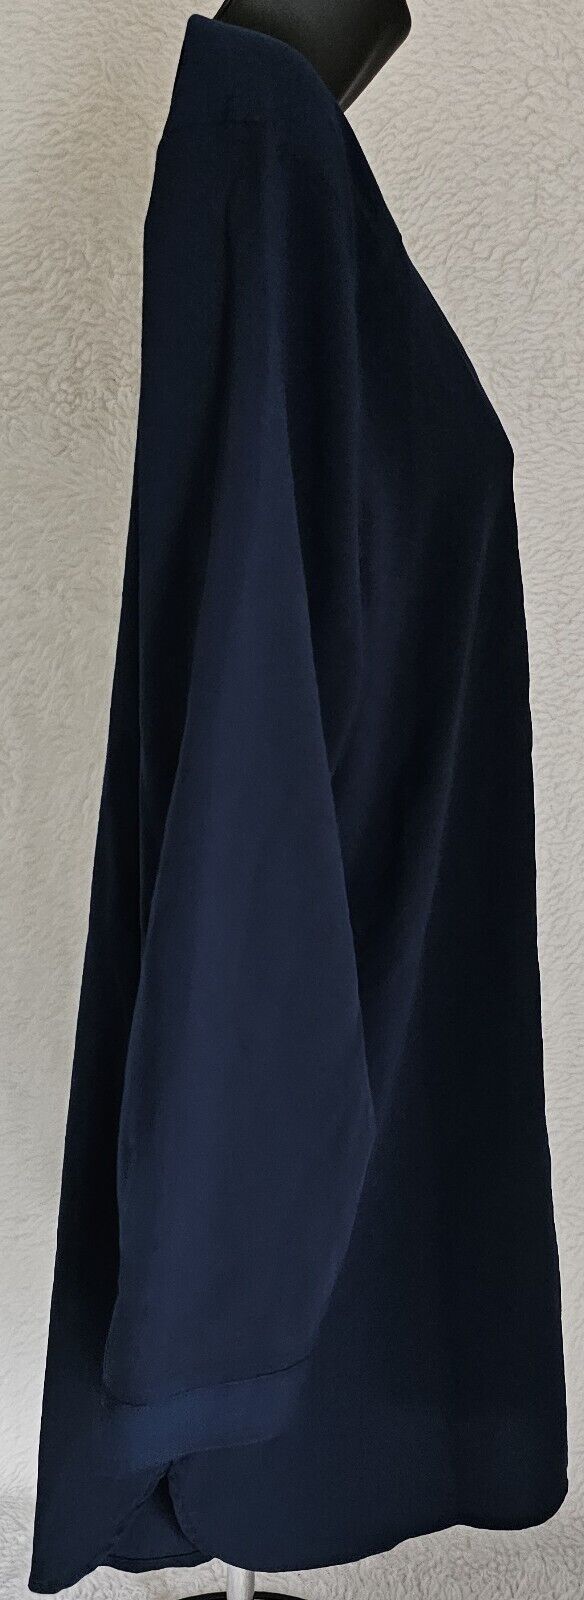 Van Heusen Shirt Top Blouse Size XL Womens Blue - image 6